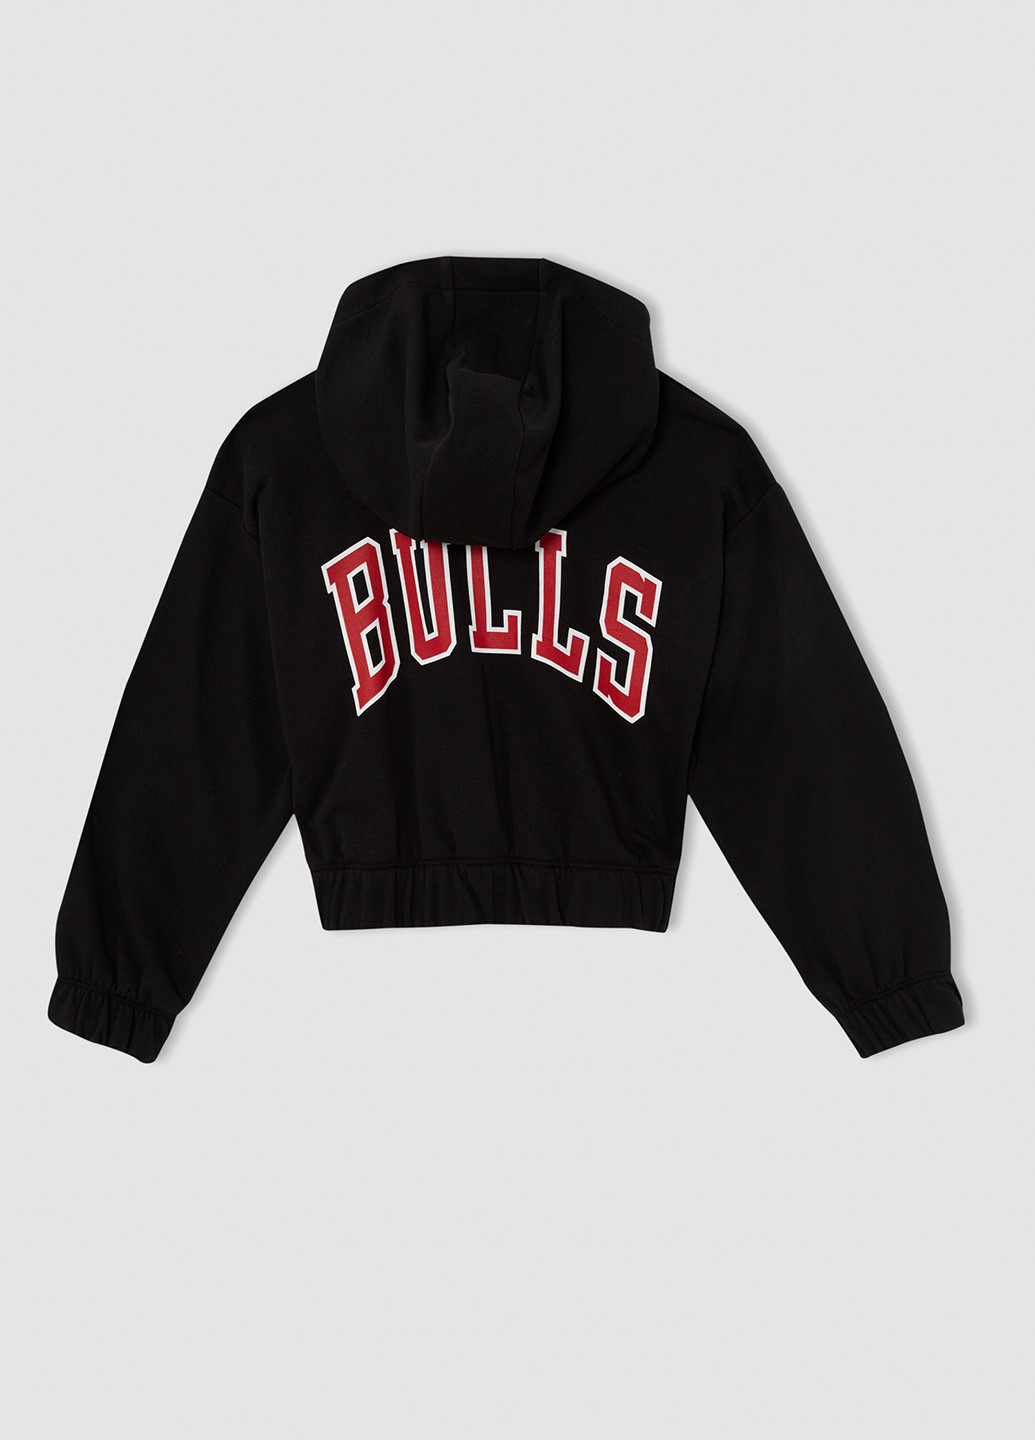 Chicago Bulls DeFacto кардиган/болеро (250460213)